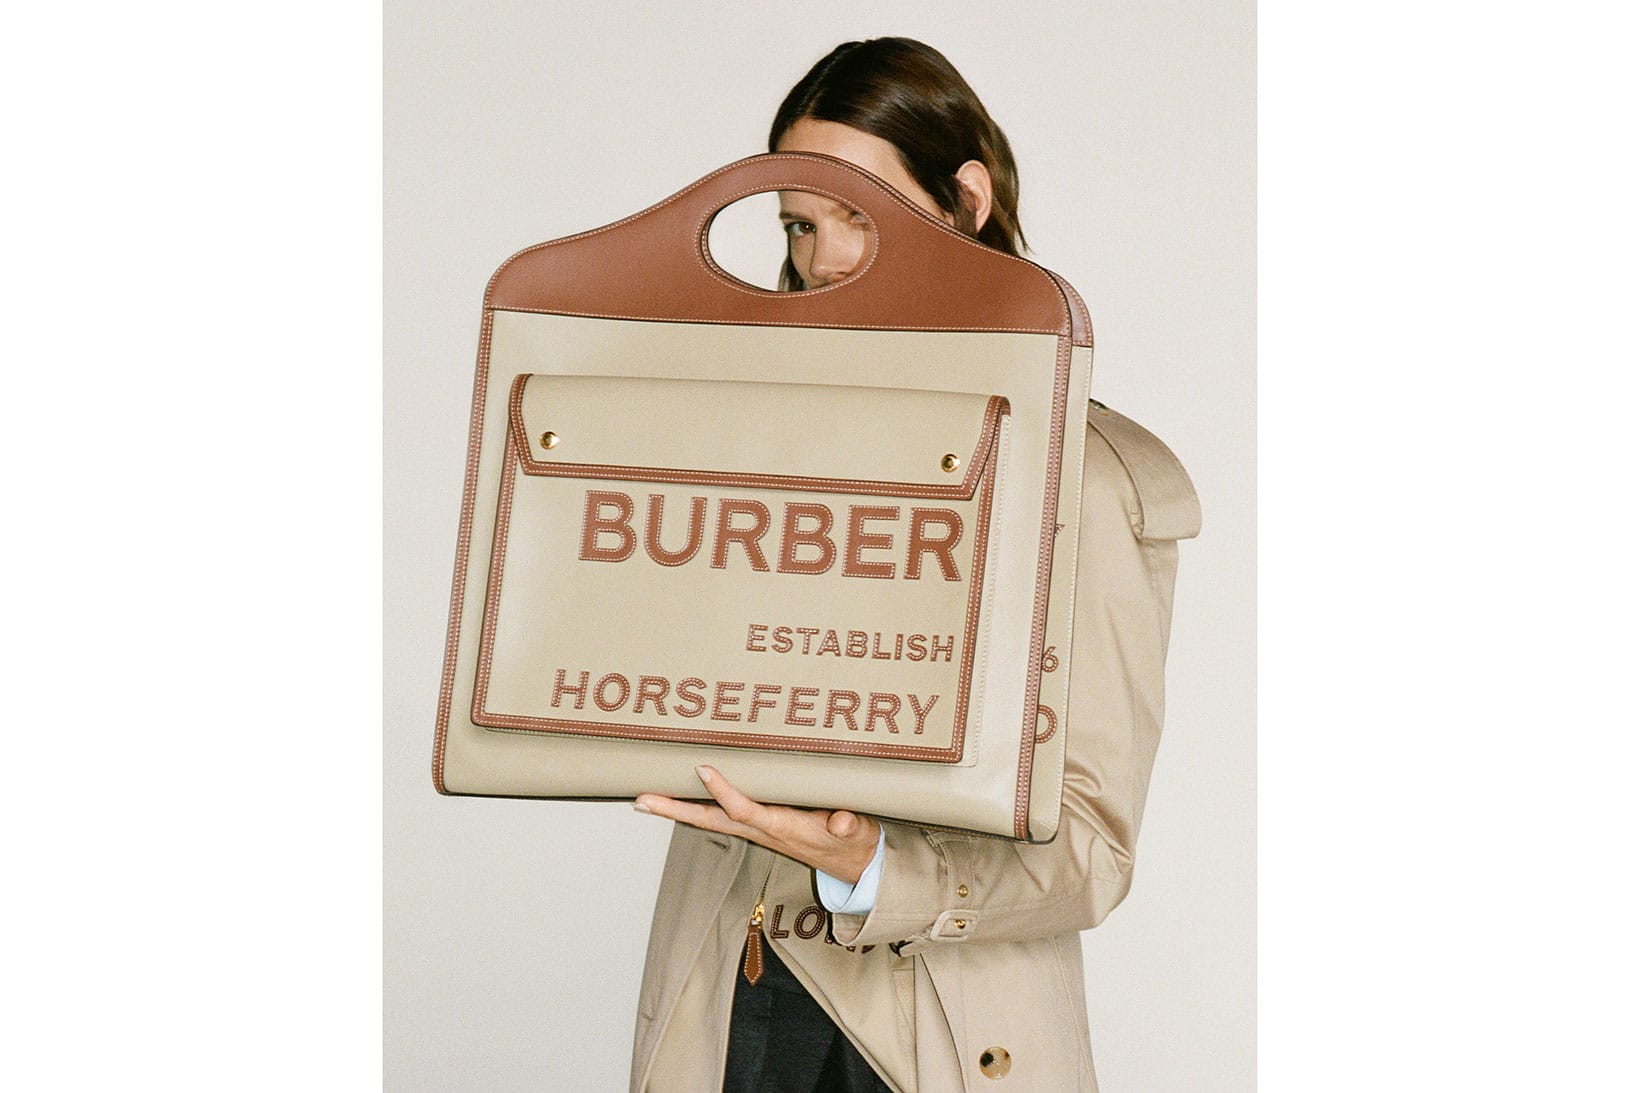 burberry canvas purse